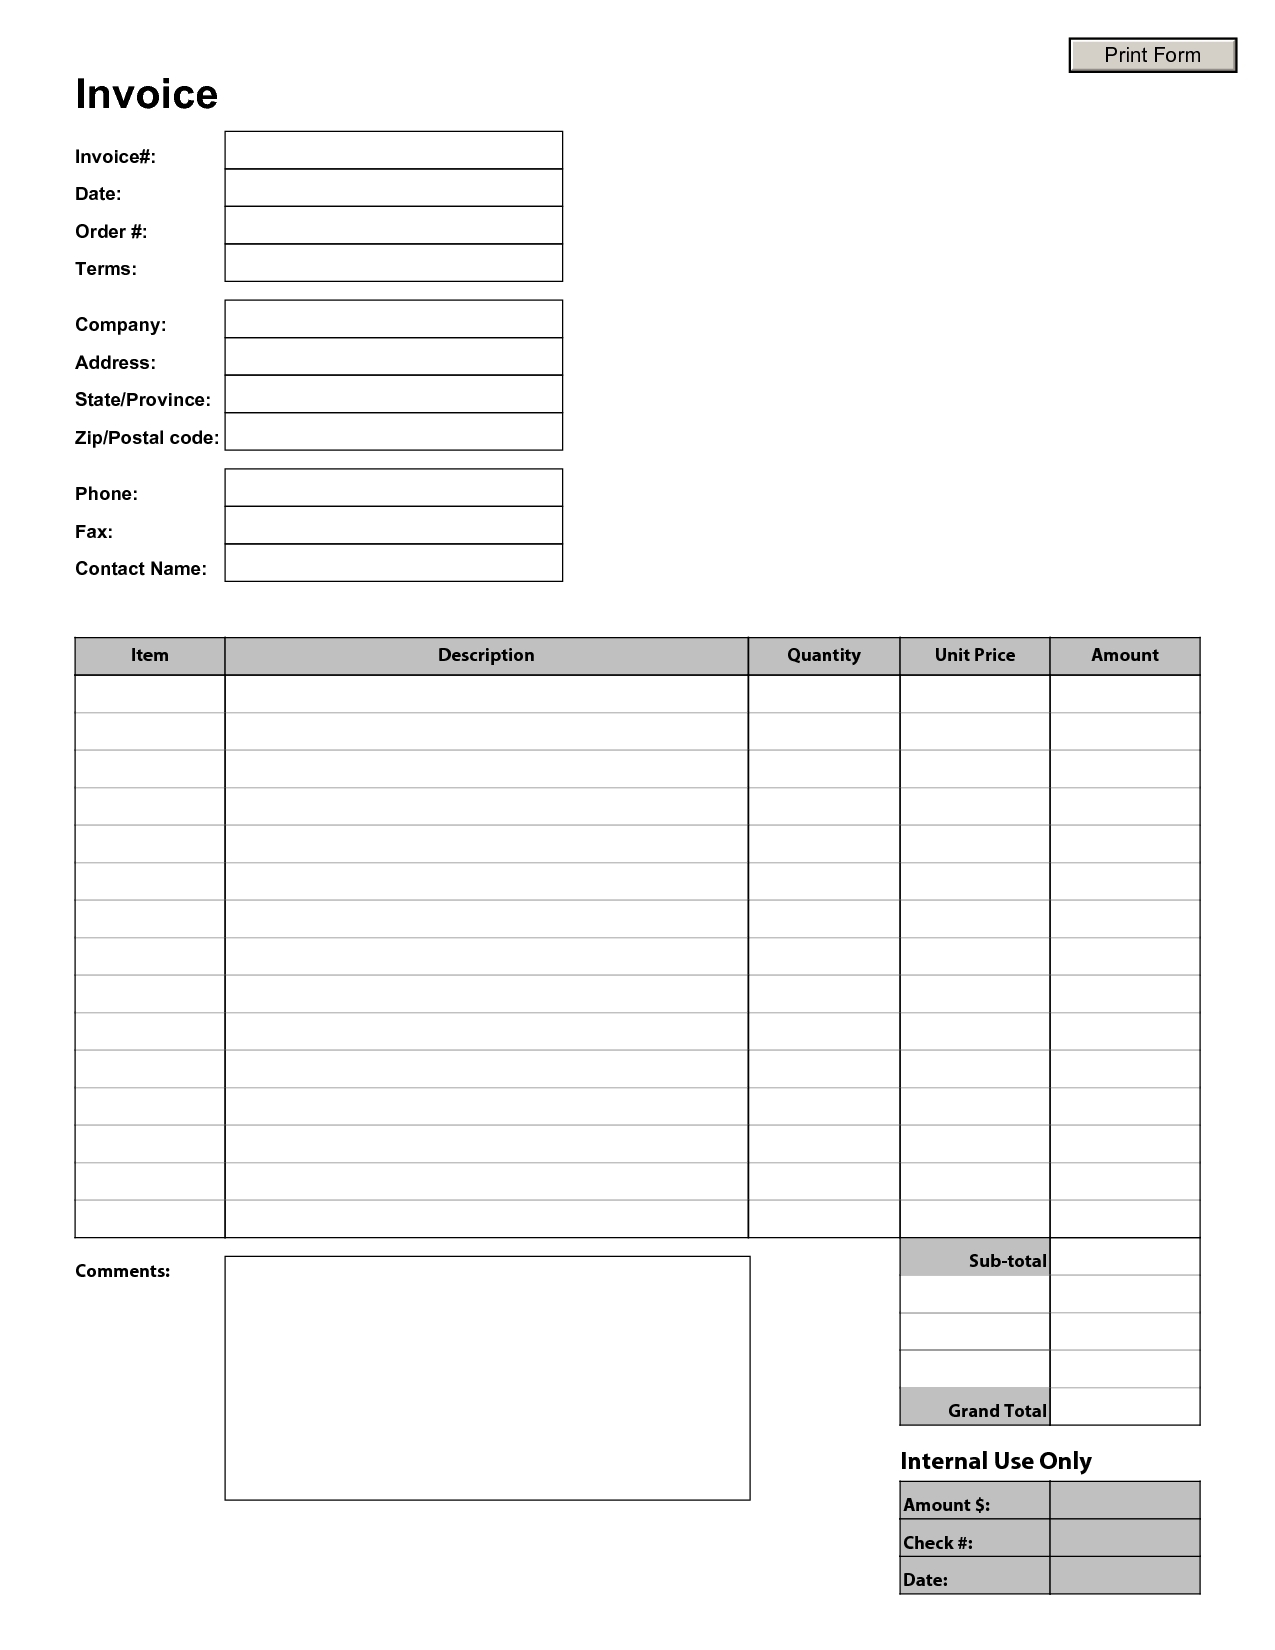 free printable invoice template invoice template free 2016 printable blank invoice template